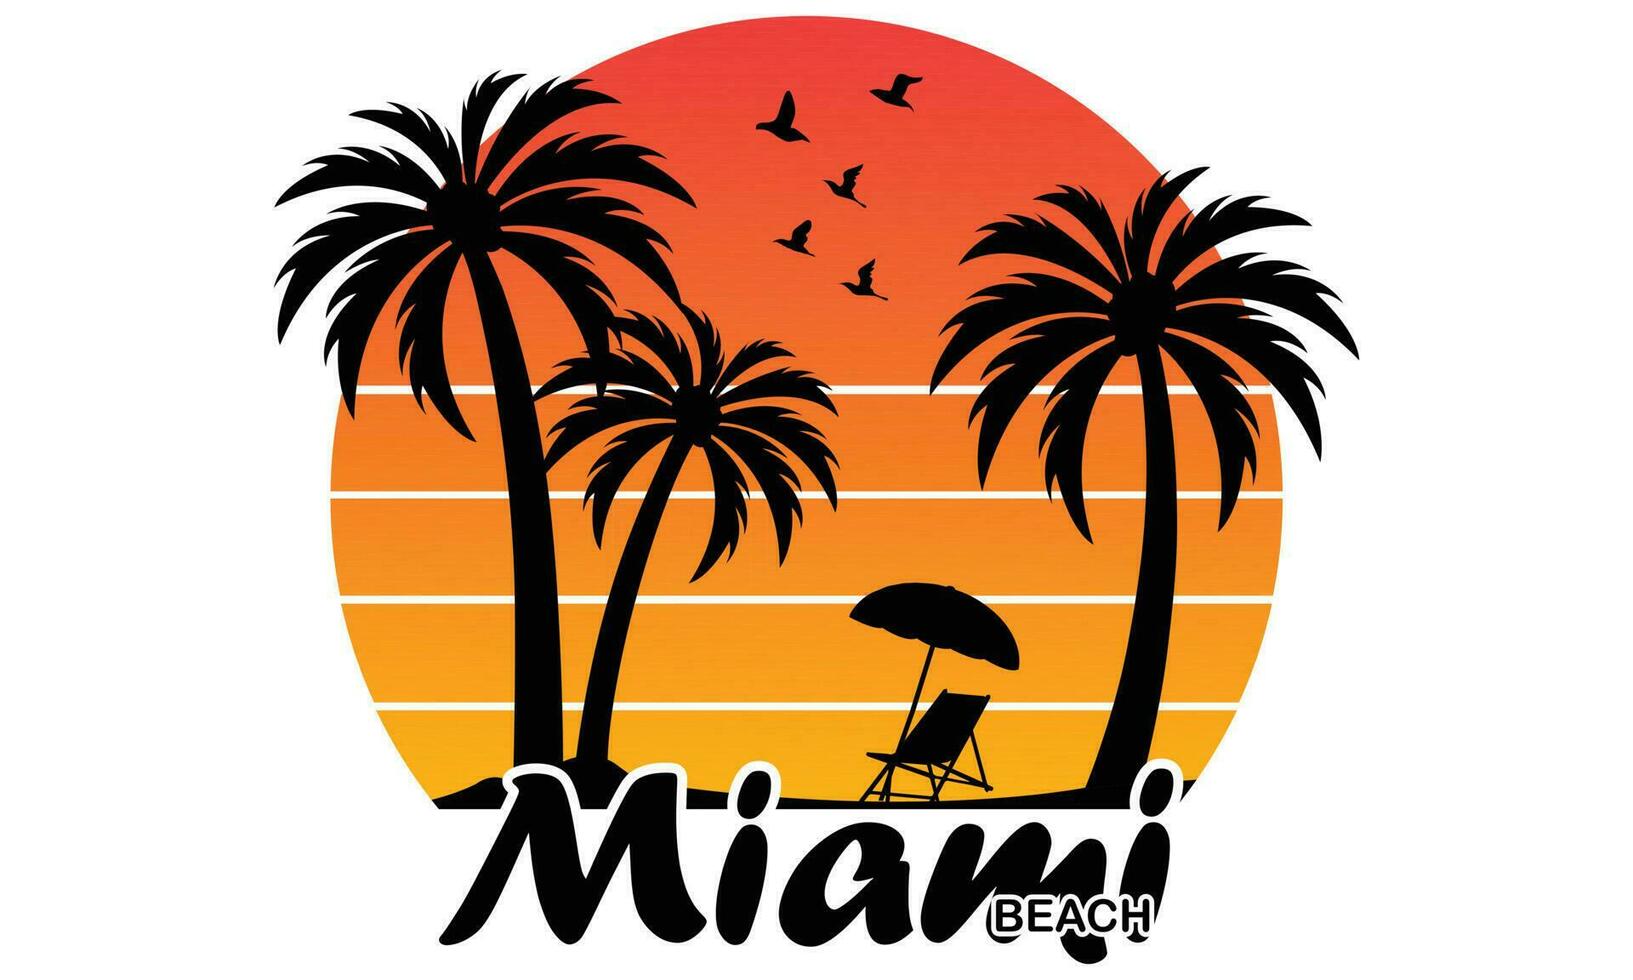 Miami playa camiseta diseño vector ilustración, palma árbol silueta. global muestras Miami playa Florida tee impresión con palma árbol. camiseta diseño, gráficos, estampilla, etiqueta, atardecer, naturaleza.